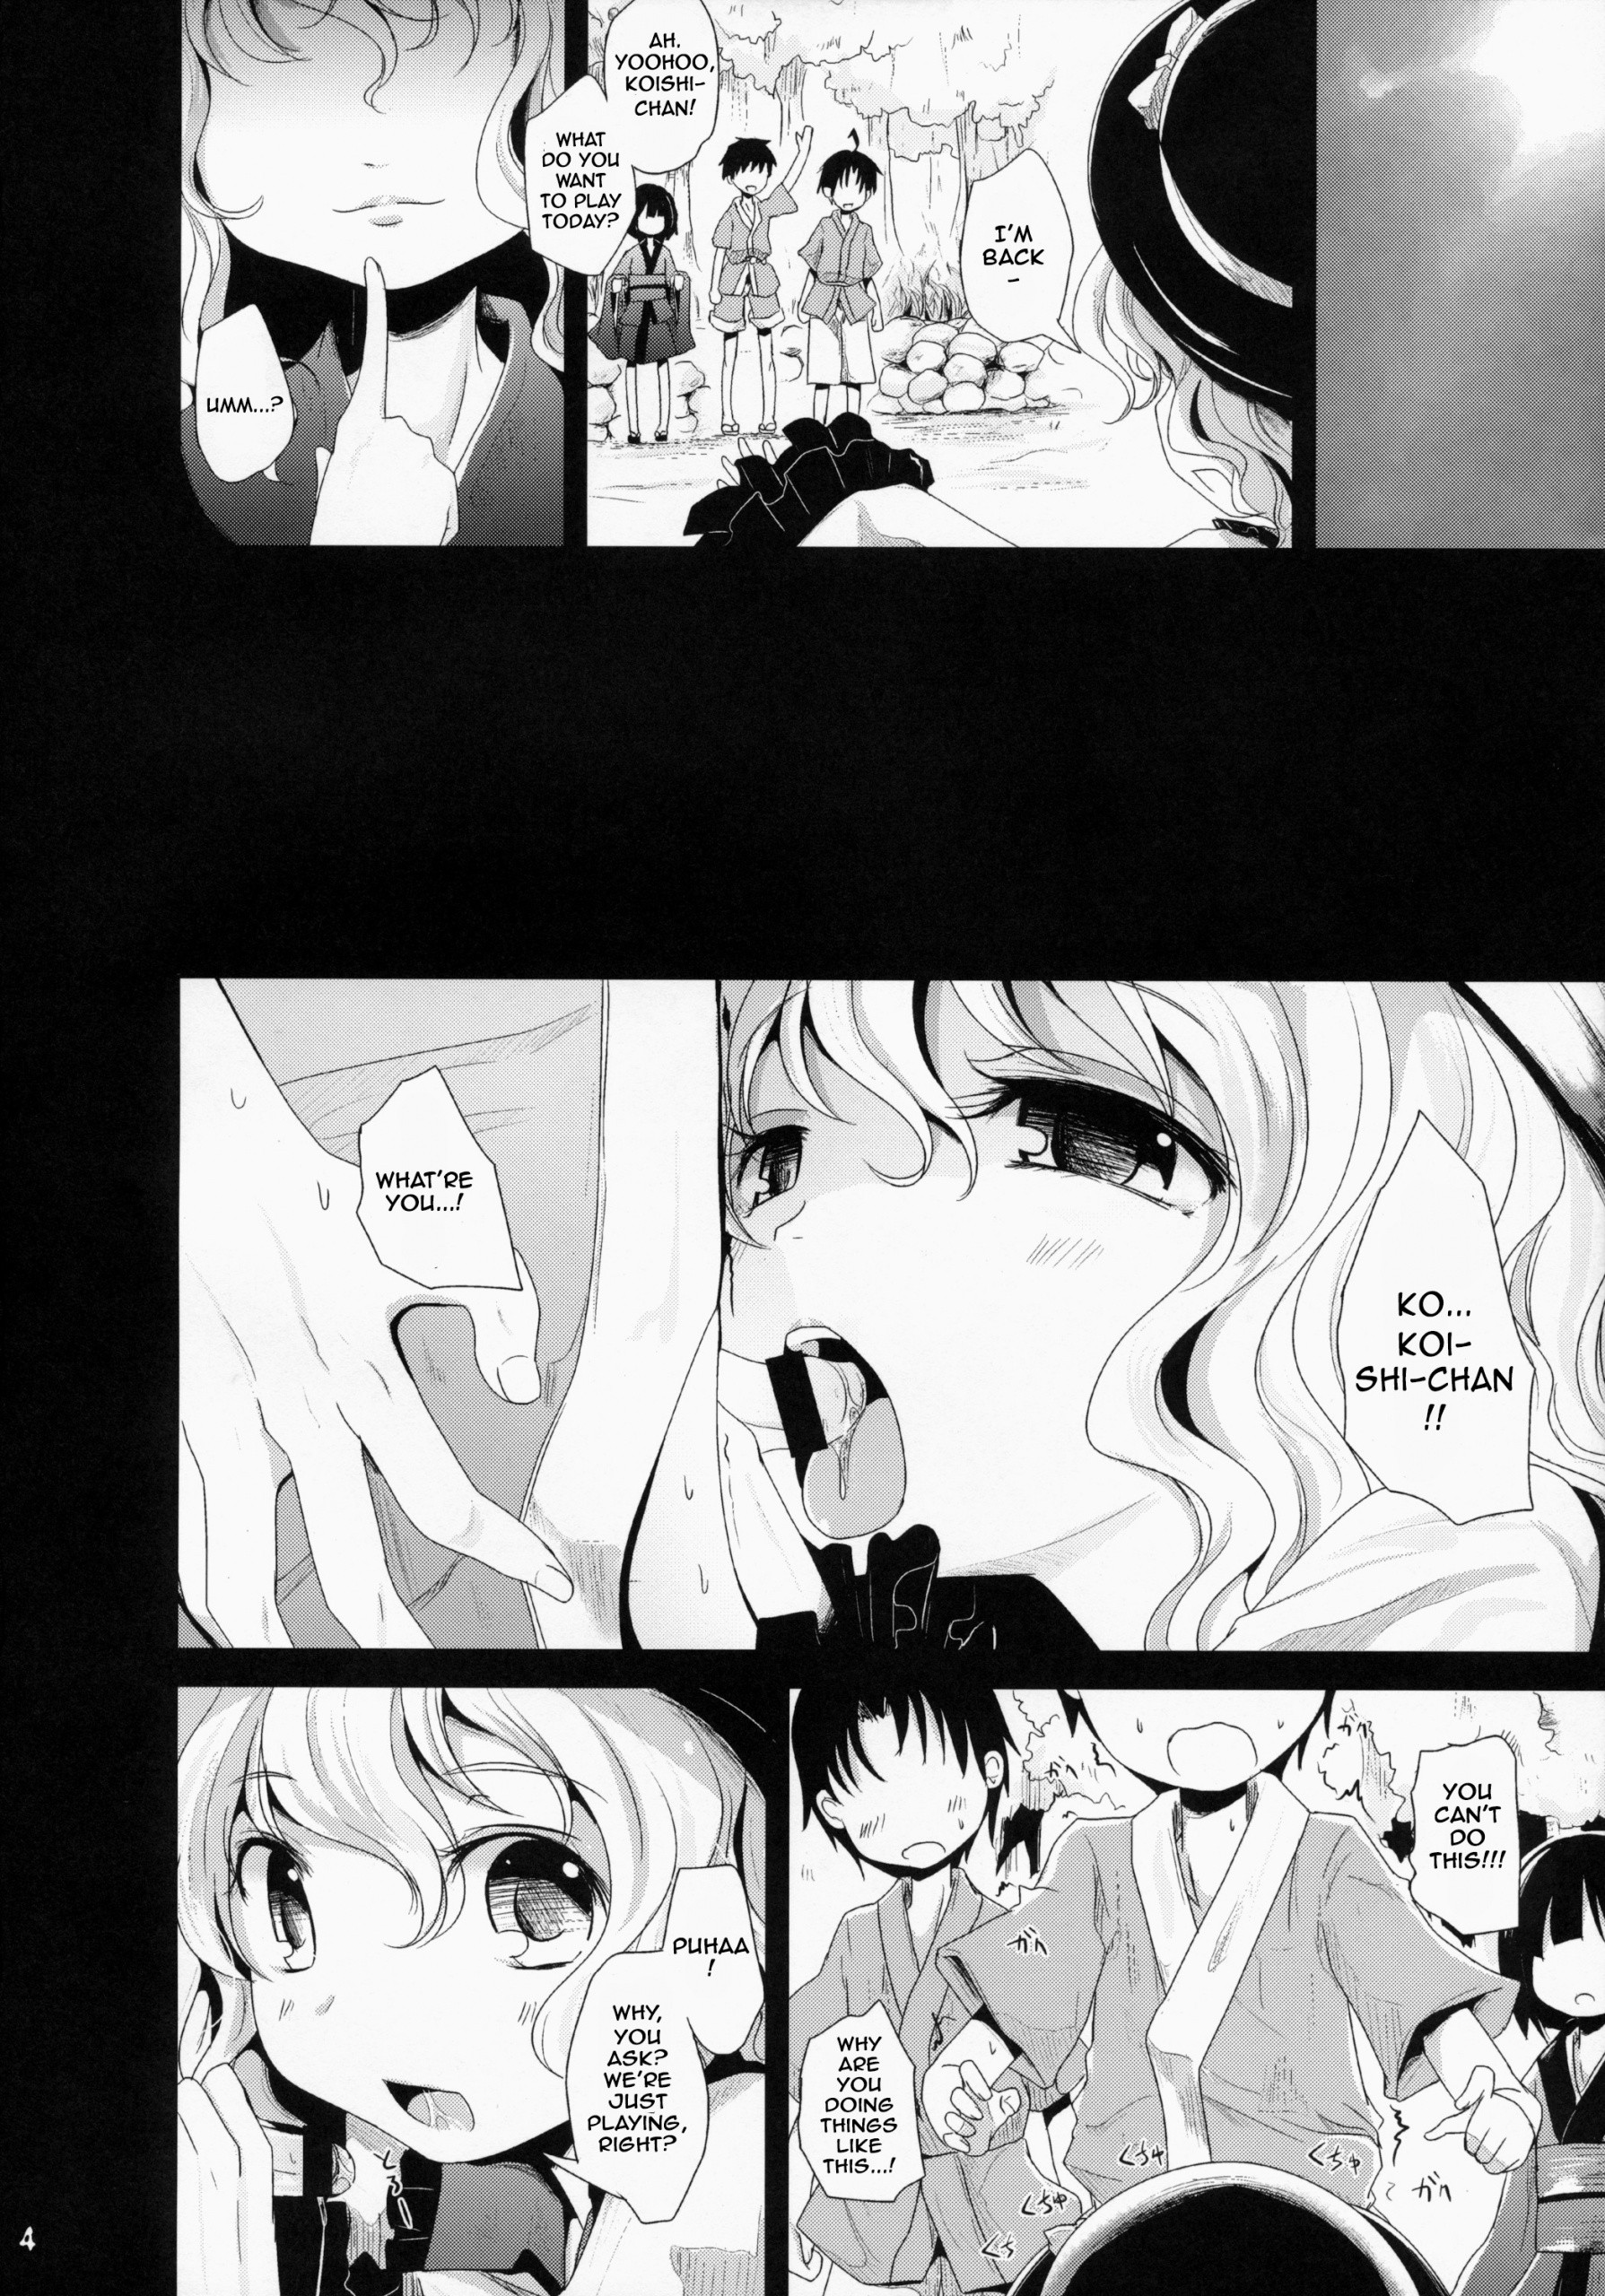 Koishi-Chan Let's Play hentai manga picture 3